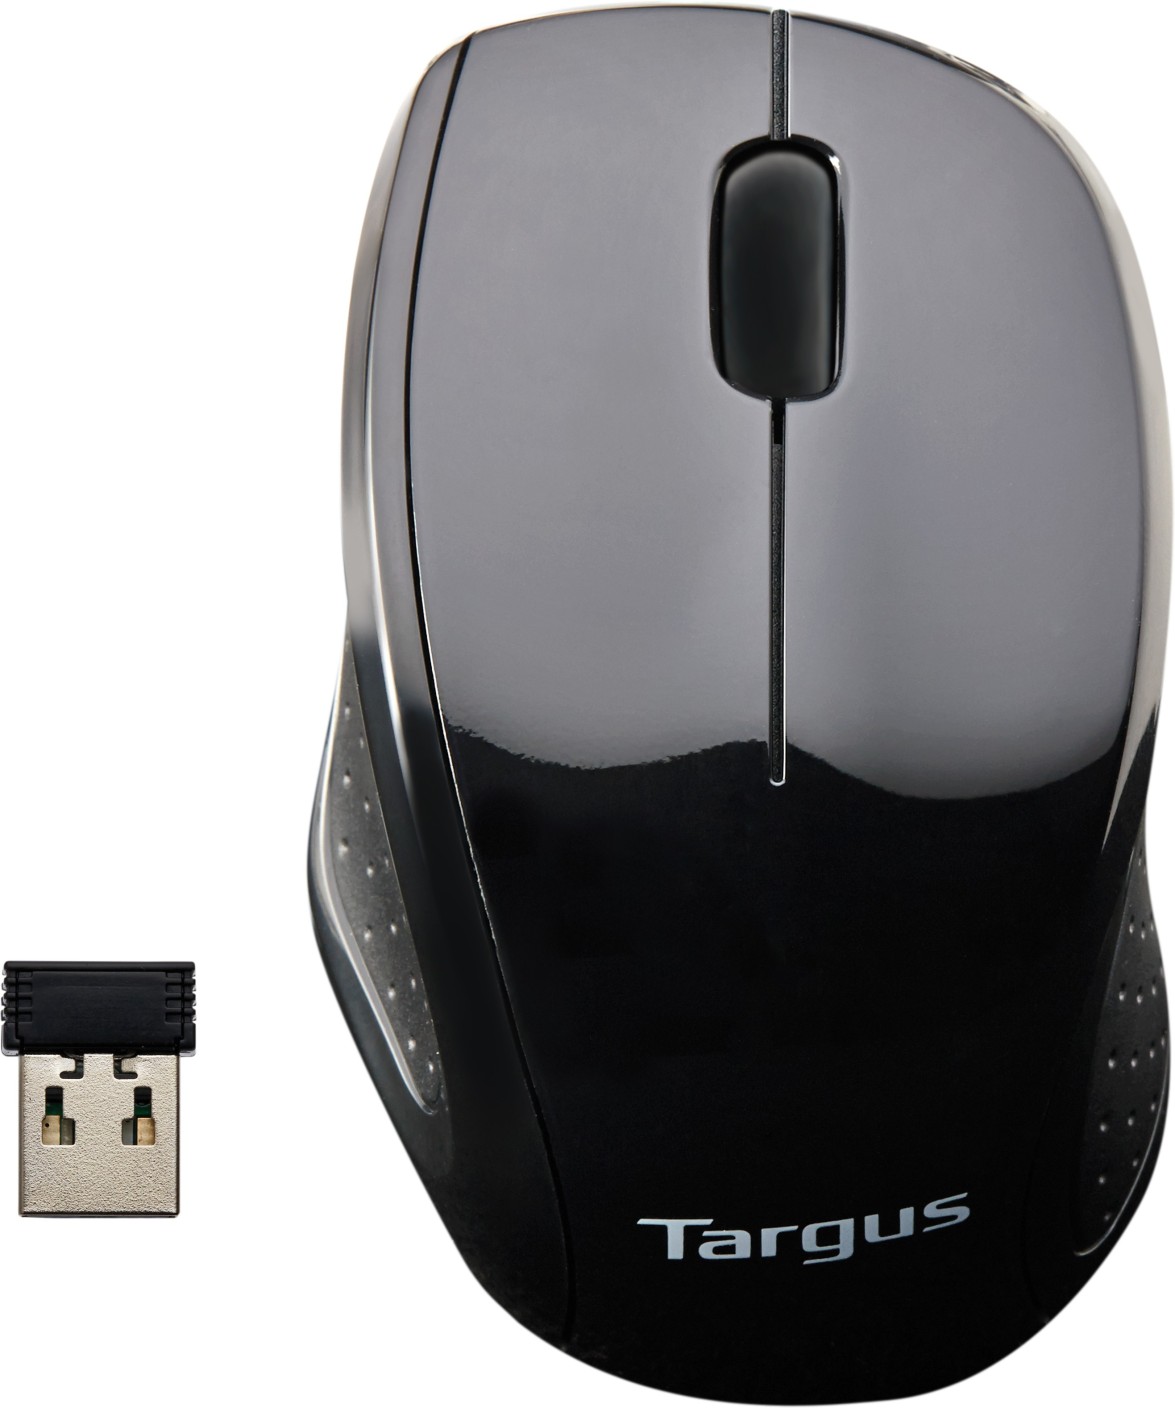 targus mouse driver model bus0227